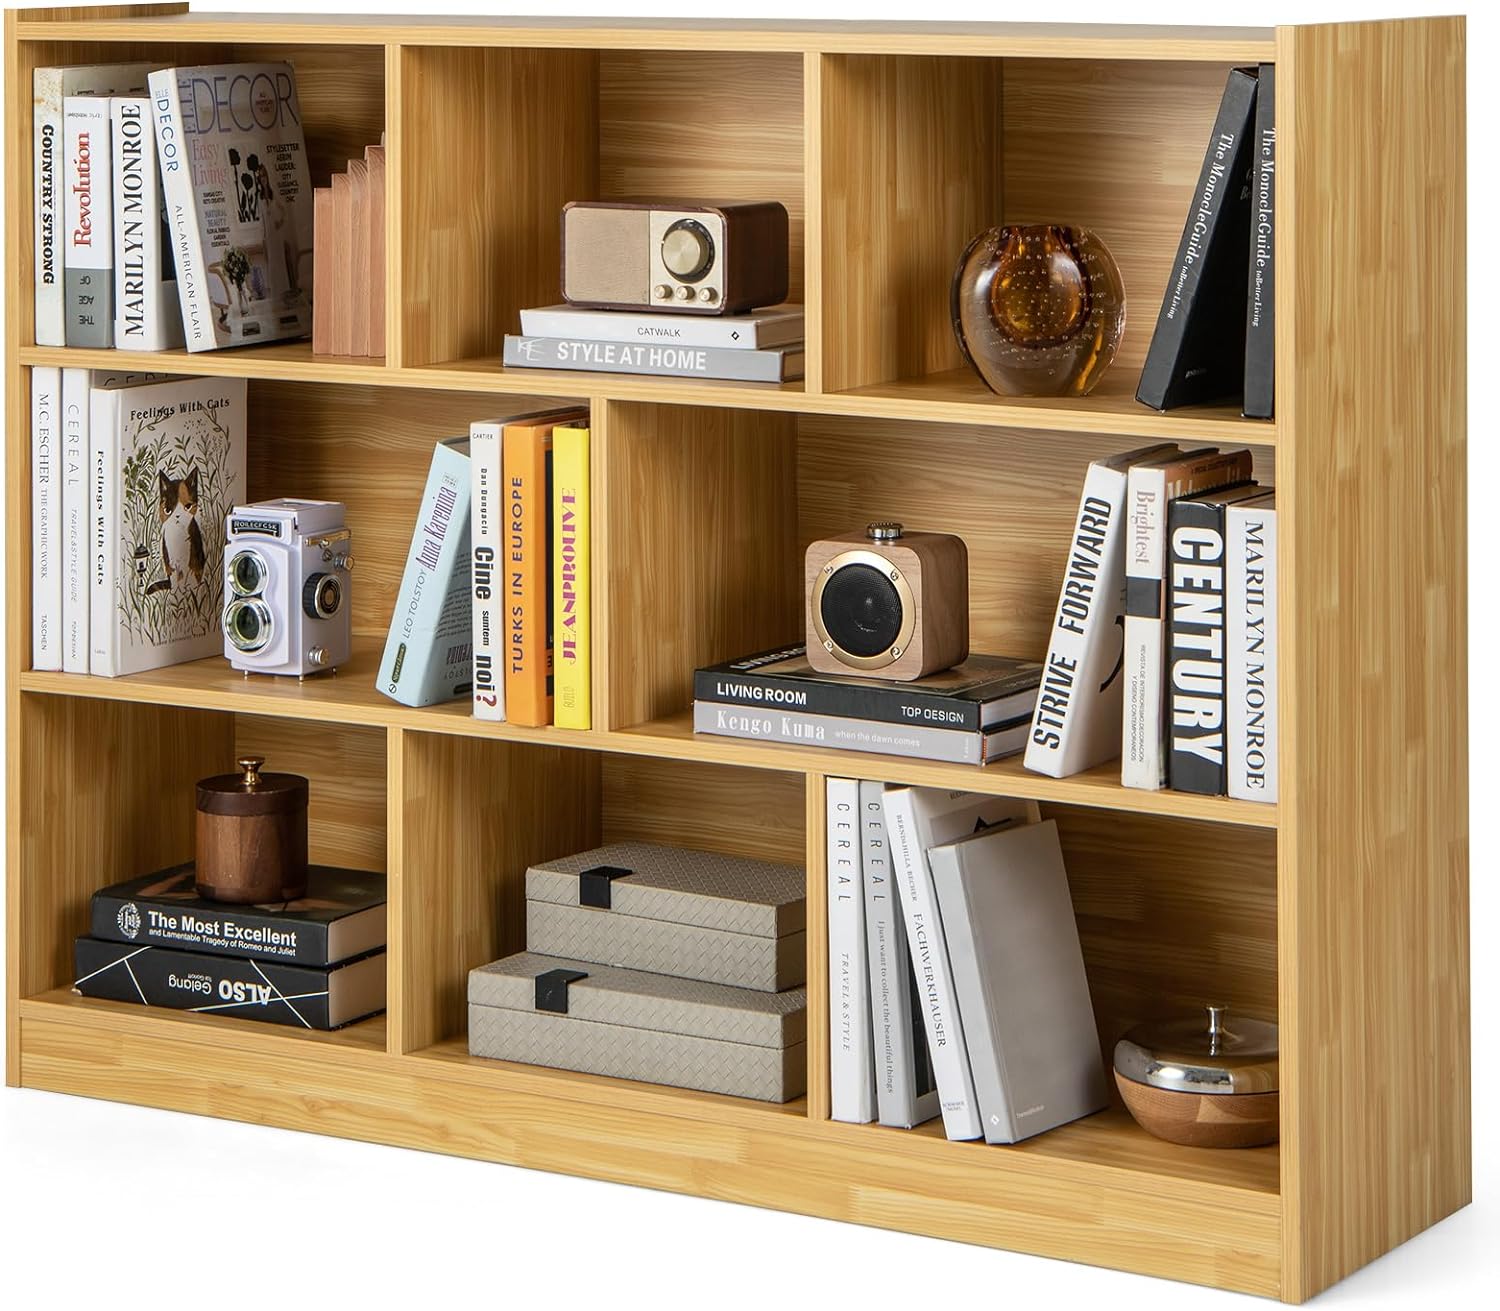 8 Cube Bookcase, Freestanding 3-Tier Open Bookshelf - Giantex